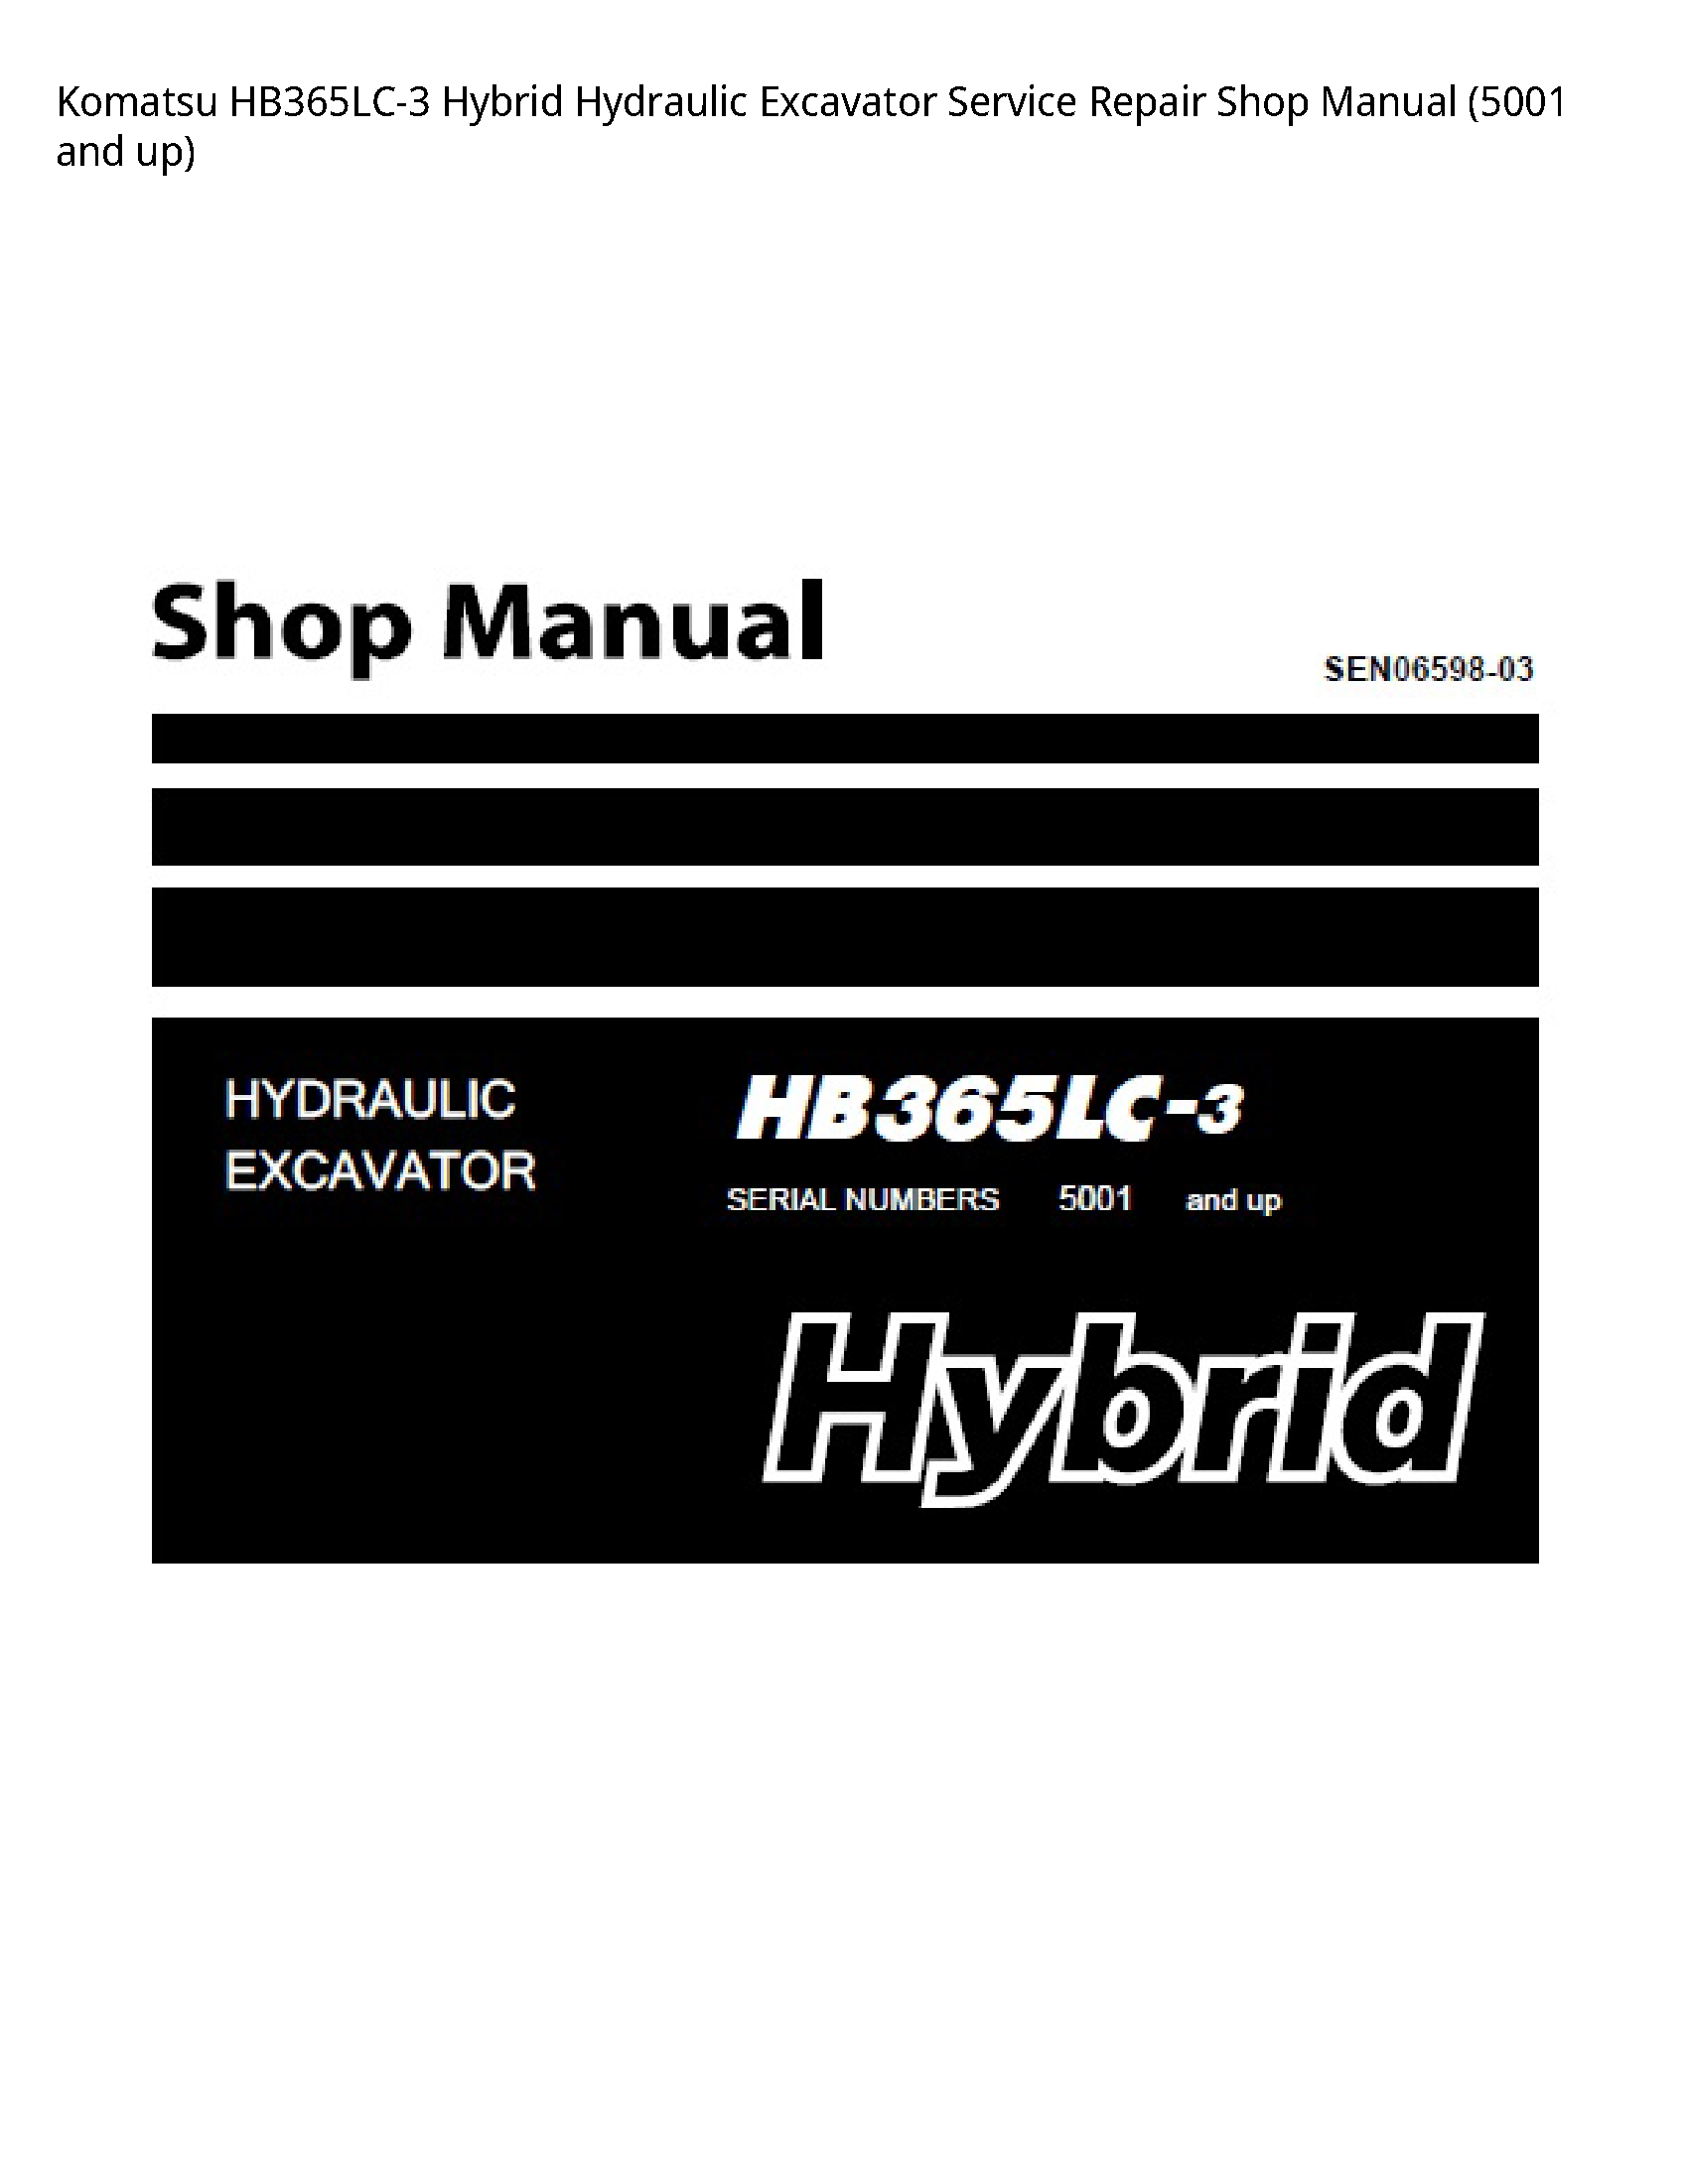 KOMATSU HB365LC-3 Hybrid Hydraulic Excavator manual